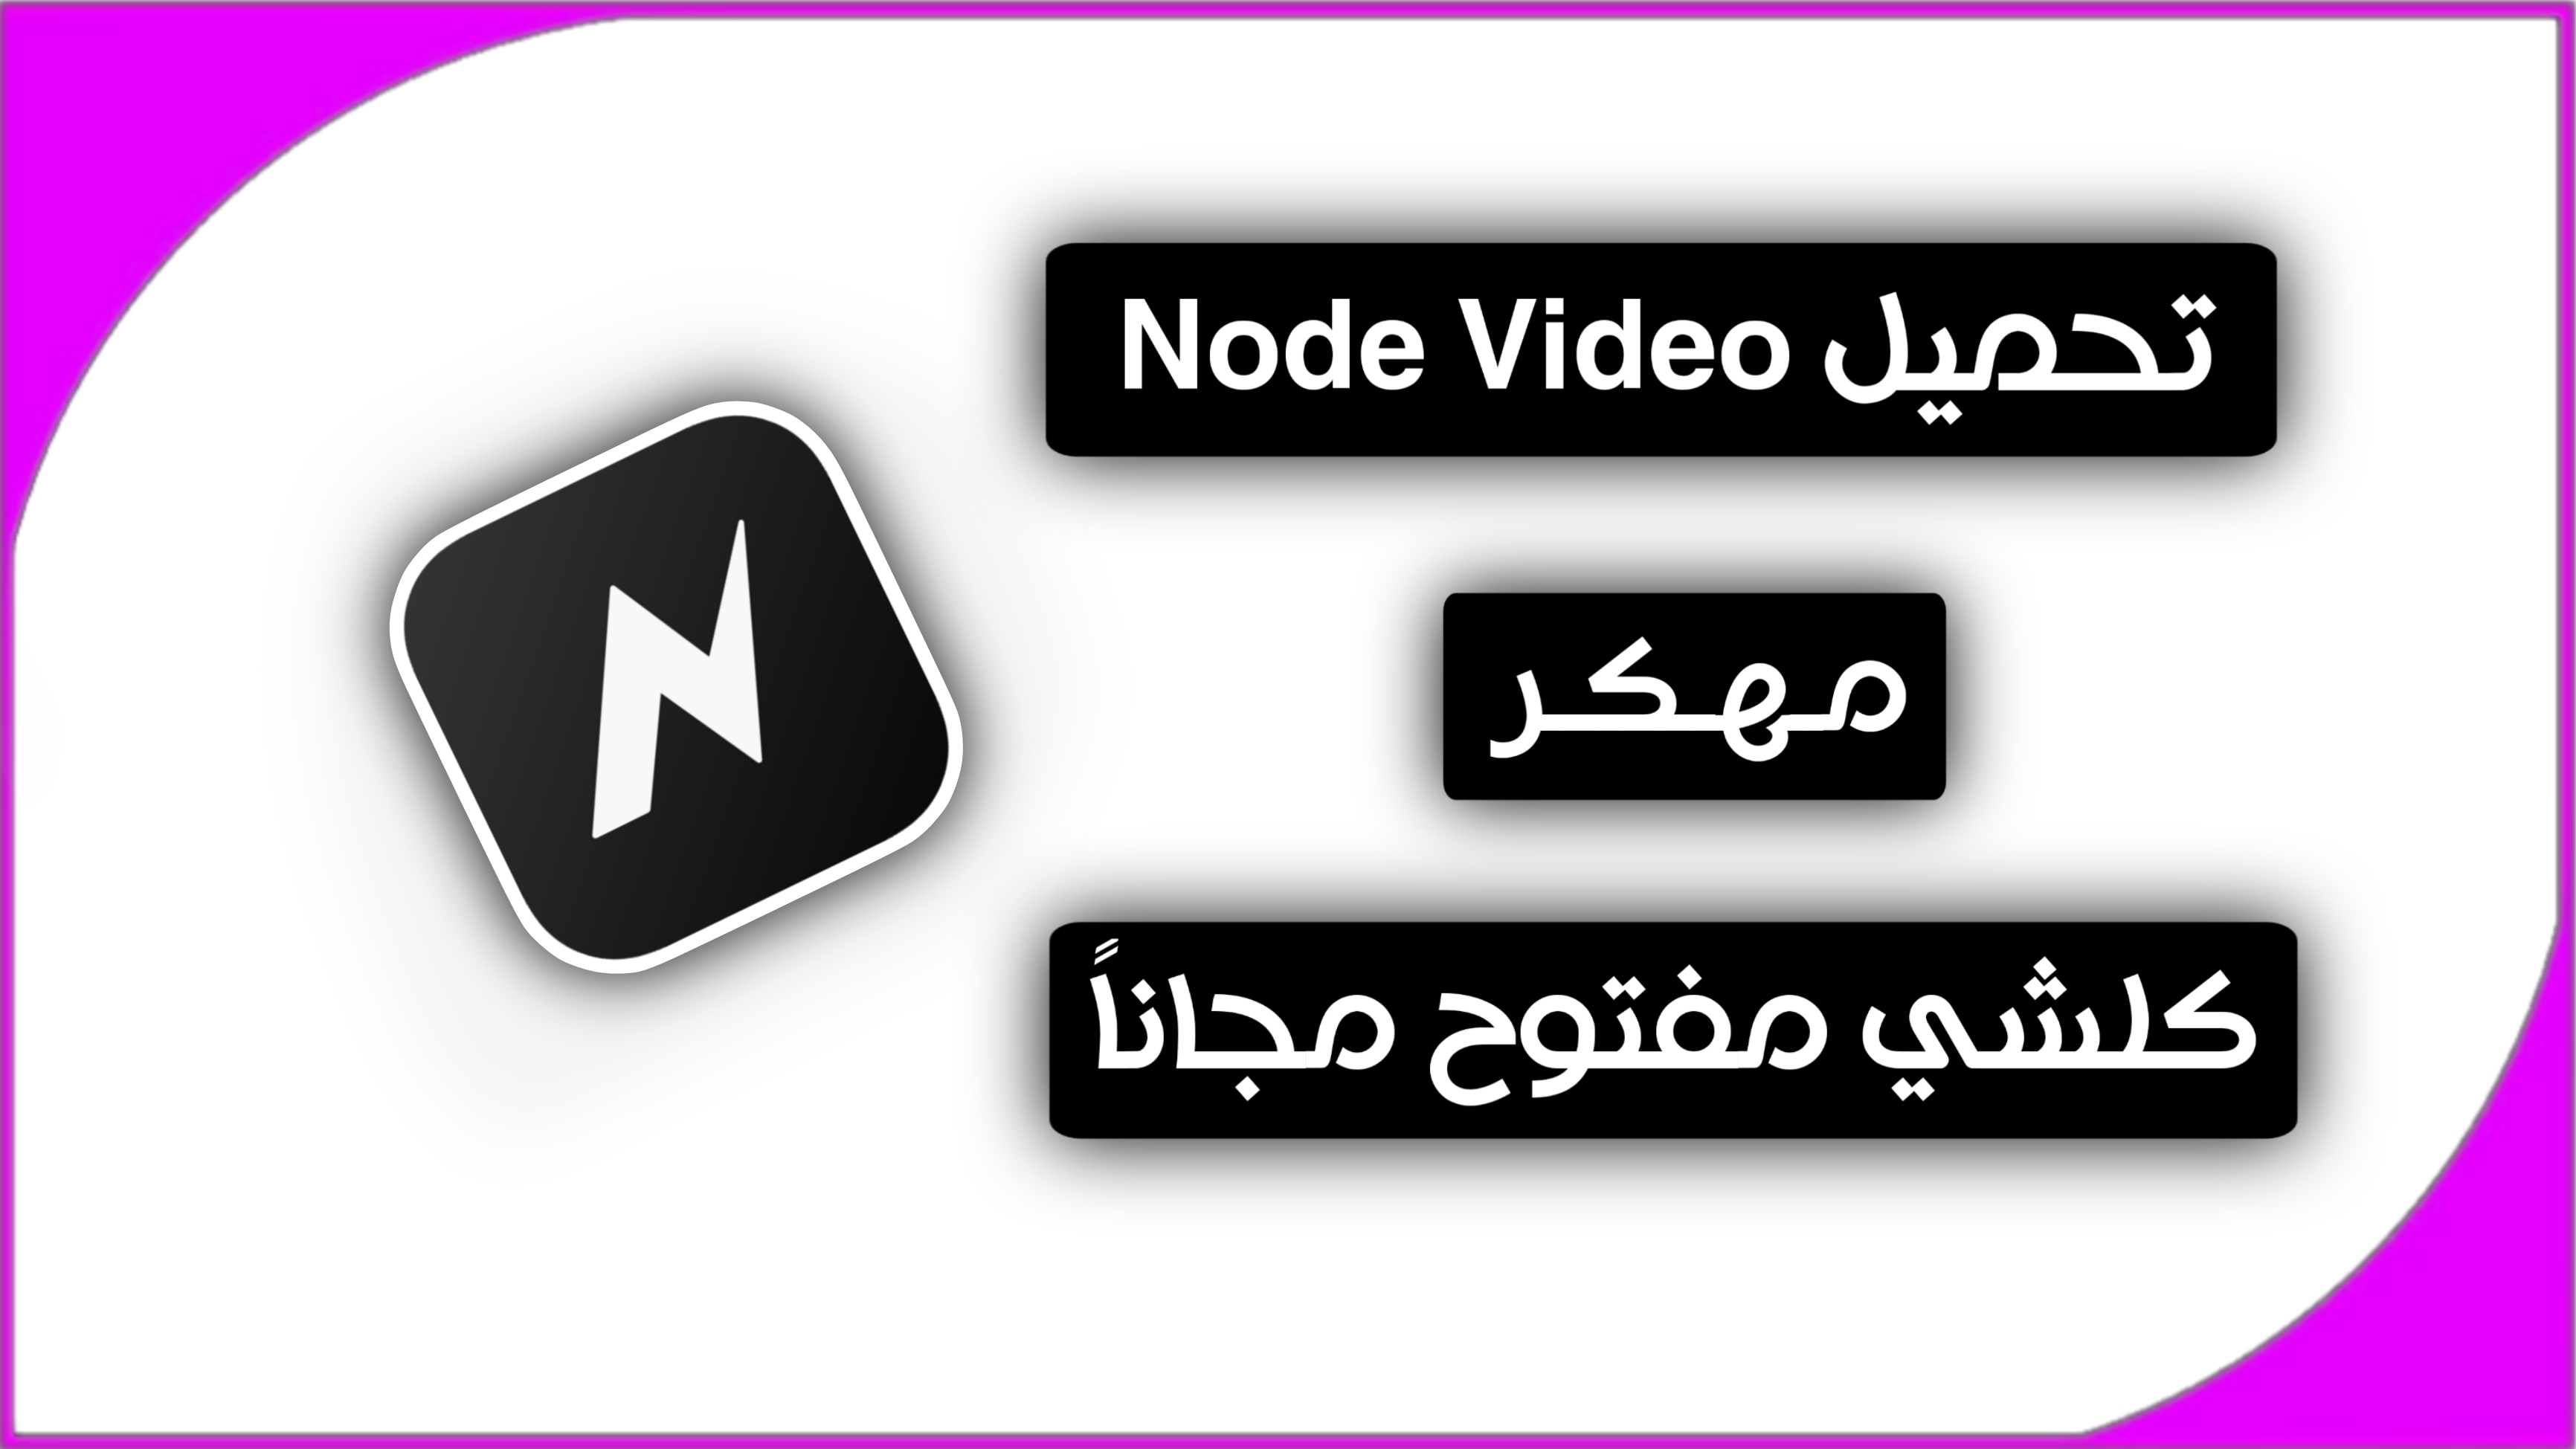 تحميل برنامج نود فيديو NodeVideo